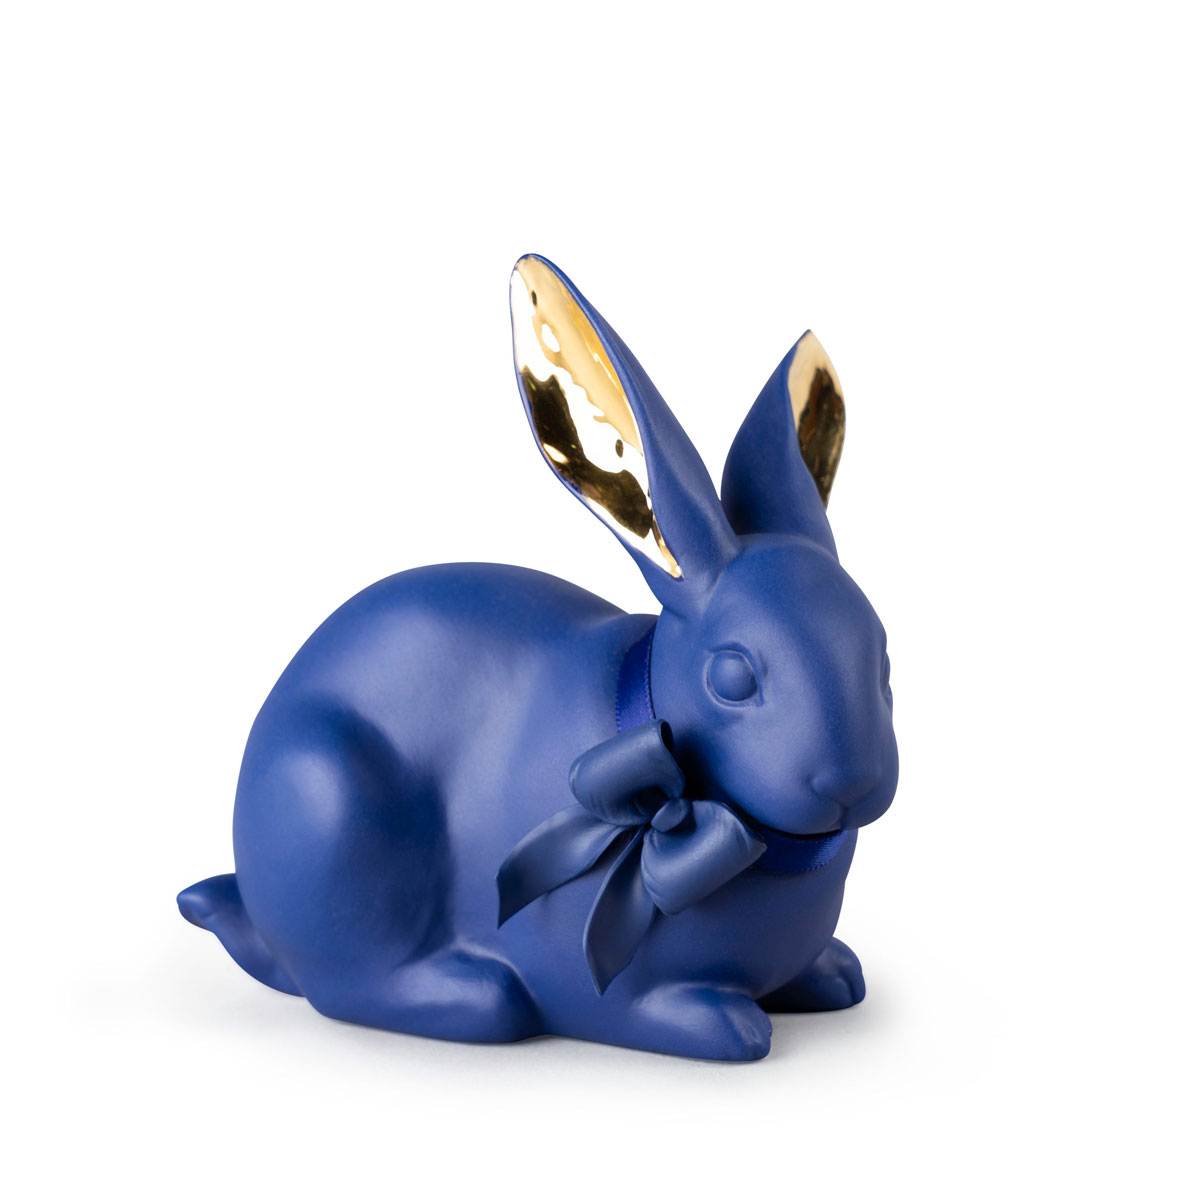 Lladro Design Figures, Attentive Bunny Blue-Gold